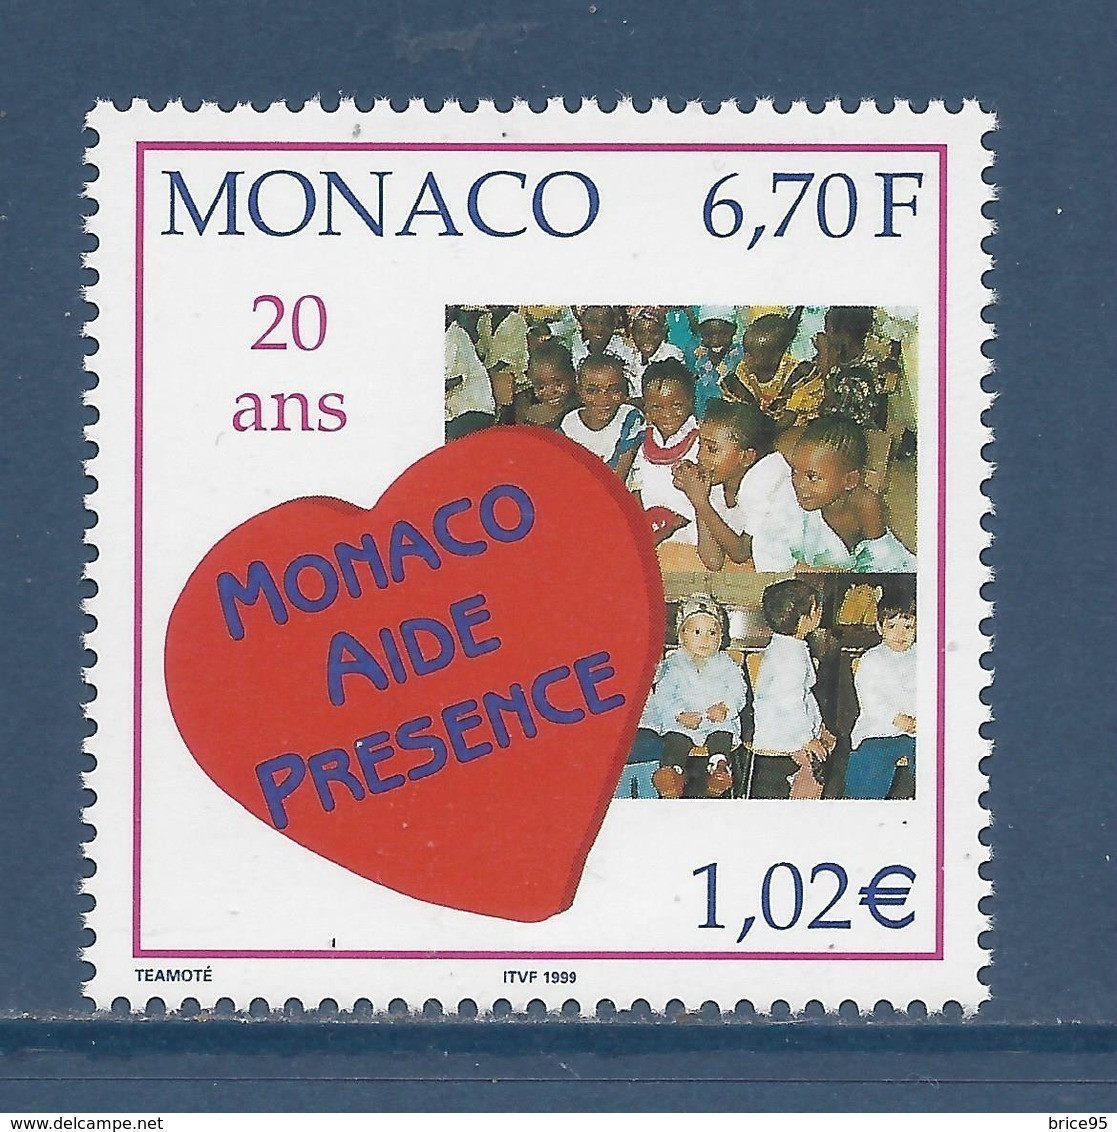 Monaco - YT N° 2191 ** - Neuf Sans Charnière - 1999 - Unused Stamps